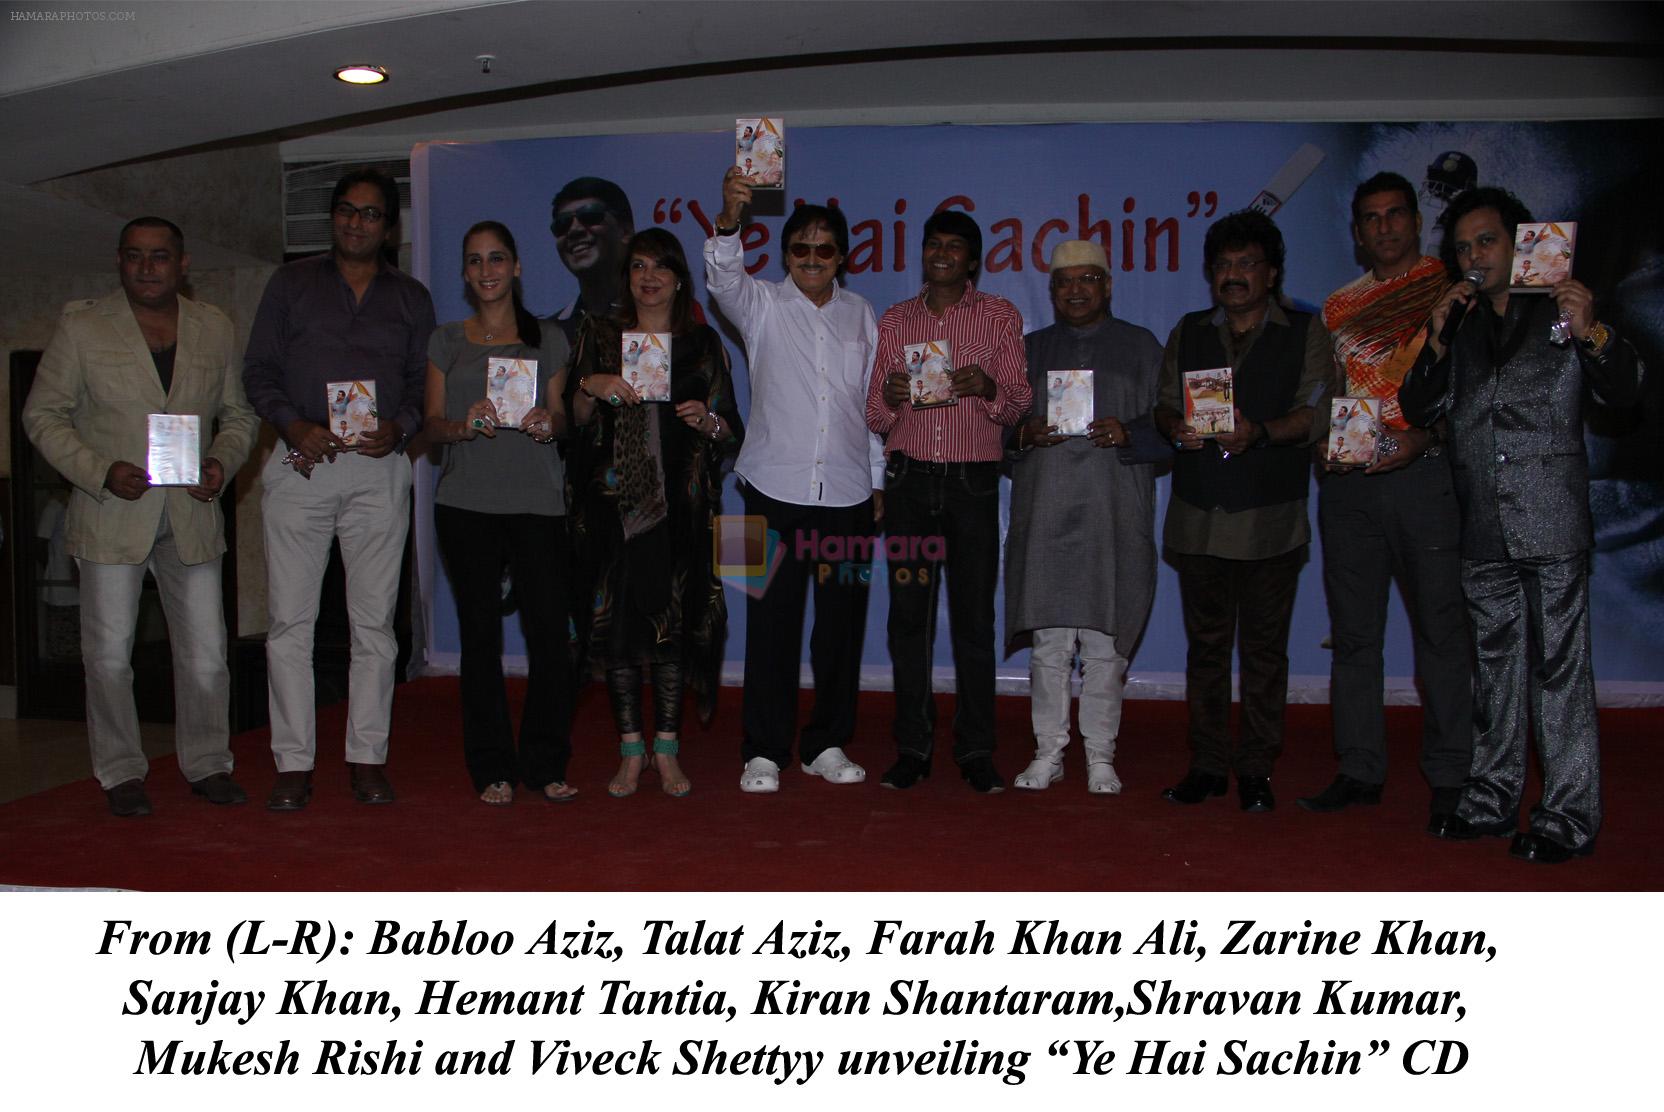 at a musical tribute to Sachin Tendulkar by Hemant Tantia in Mumbai on 24th April 2012